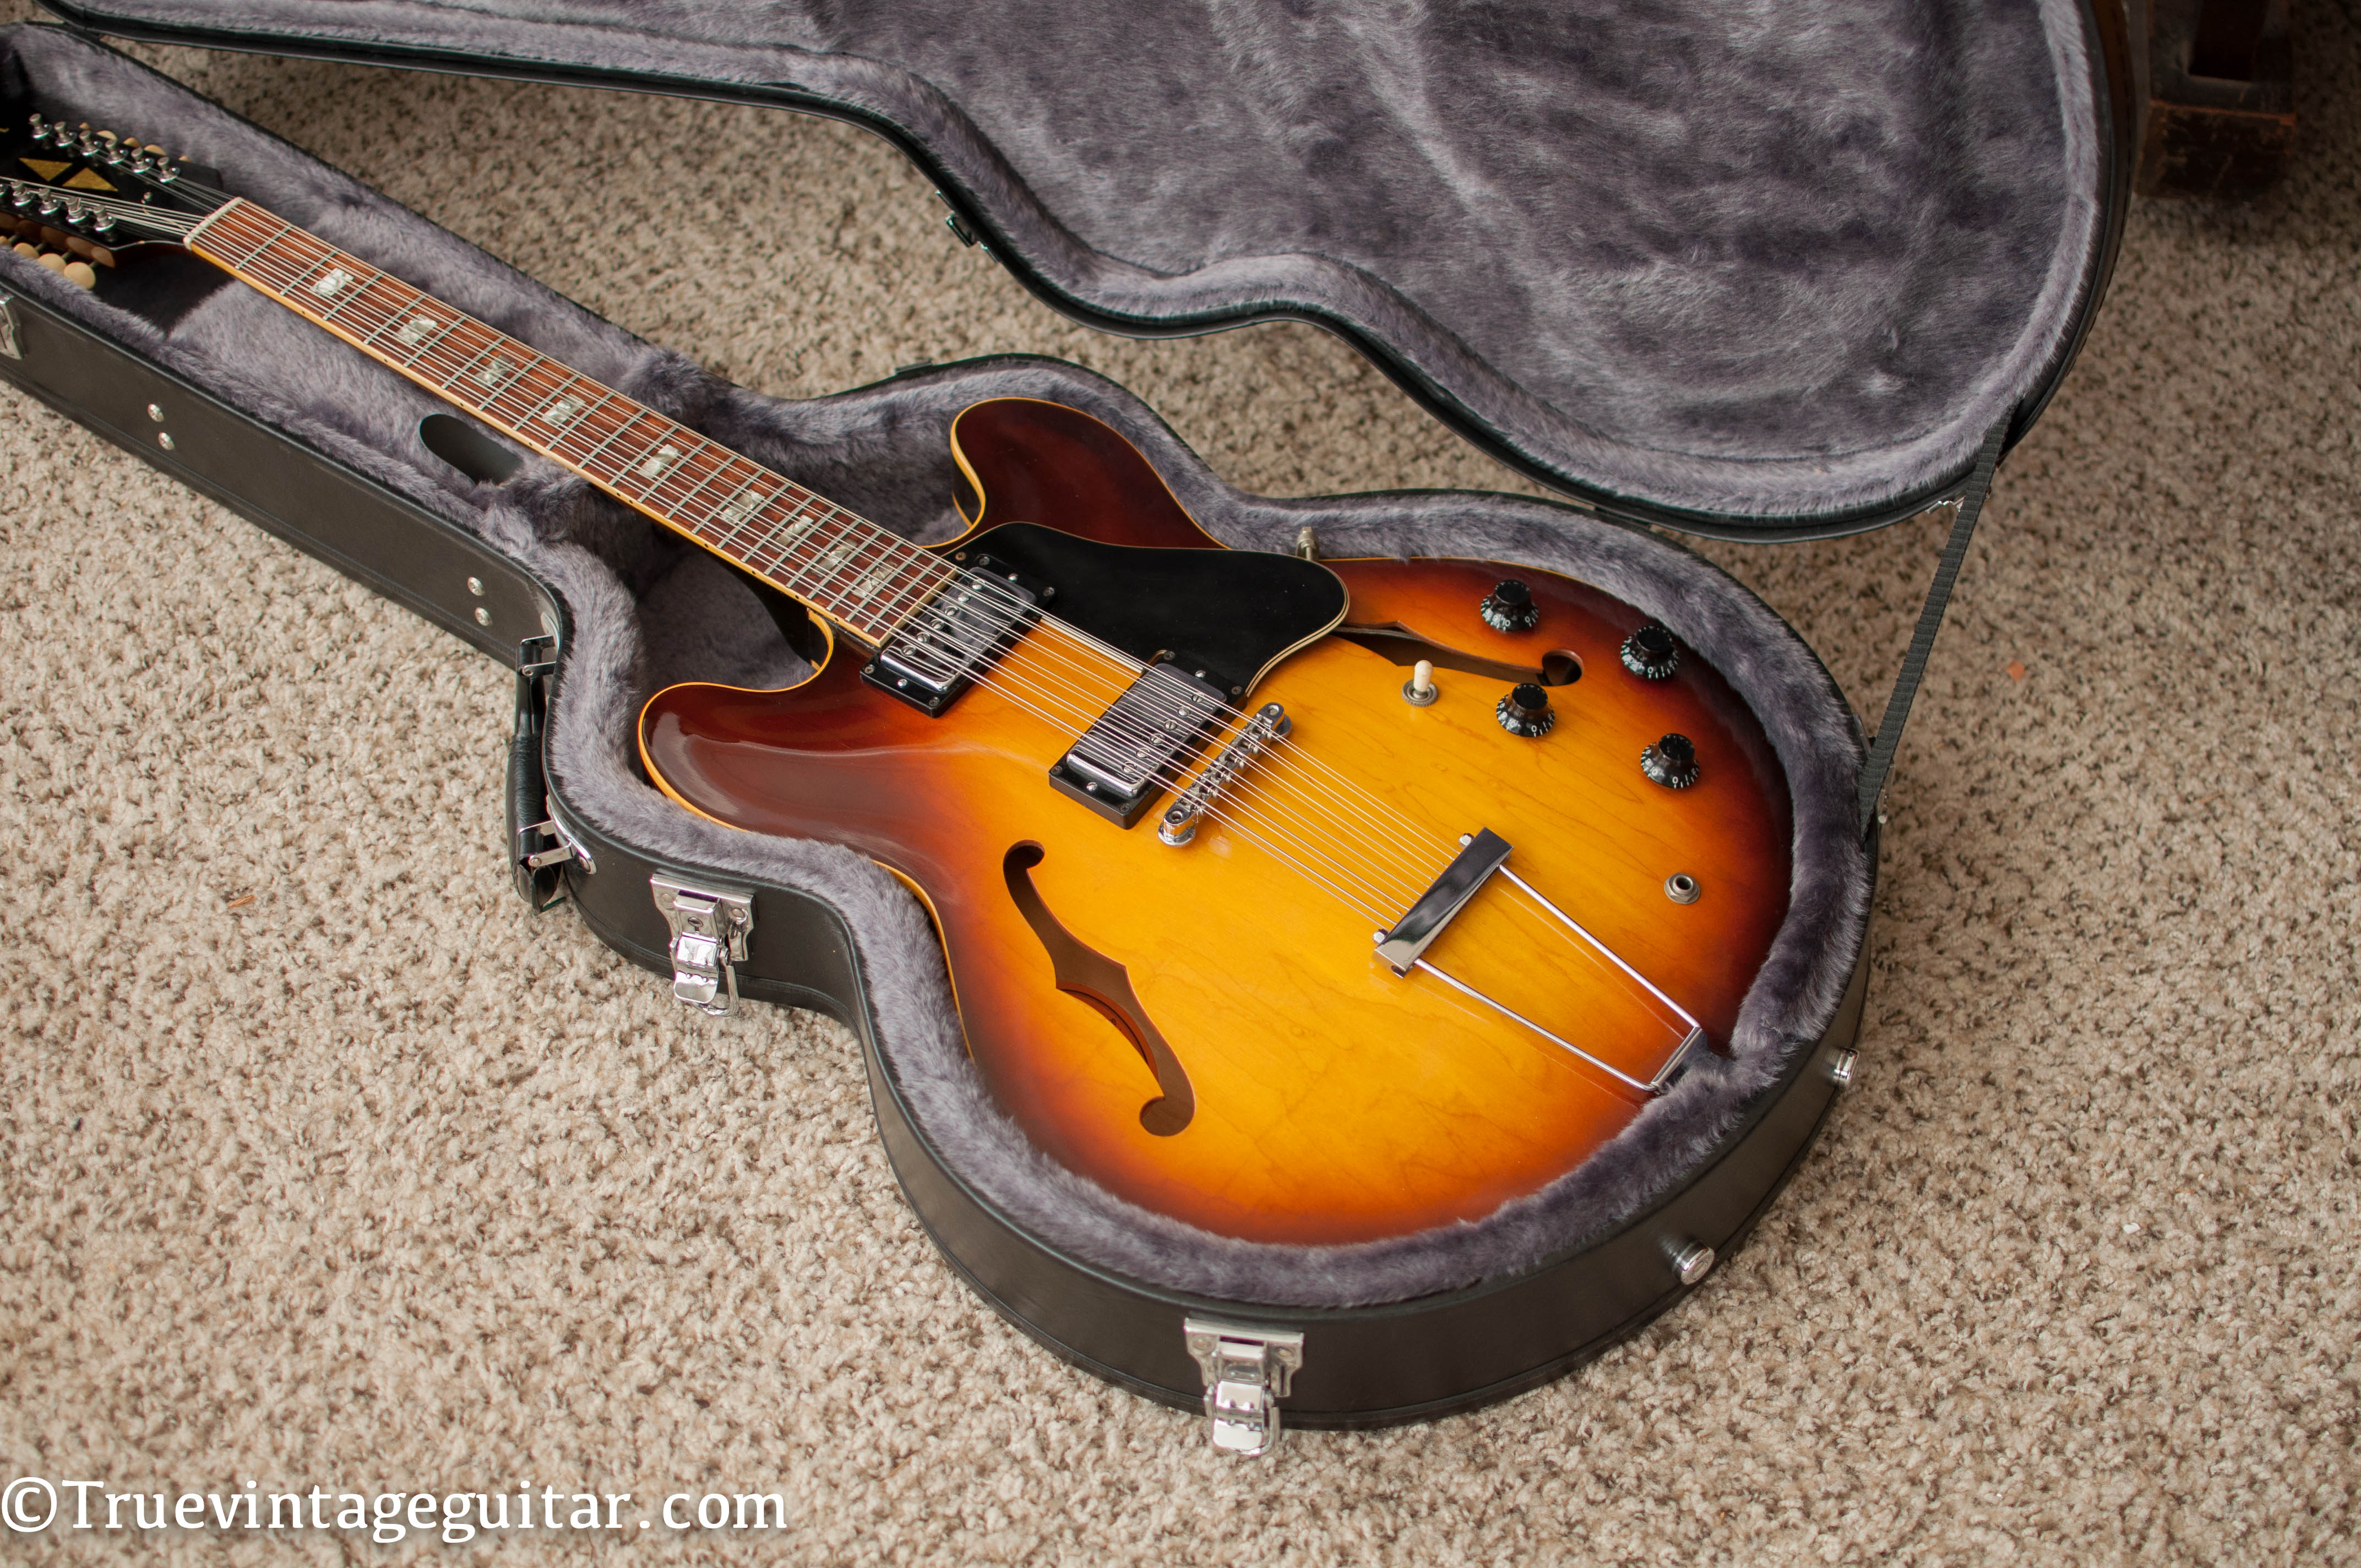 Vintage 1969 Gibson ES-335-12 guitar